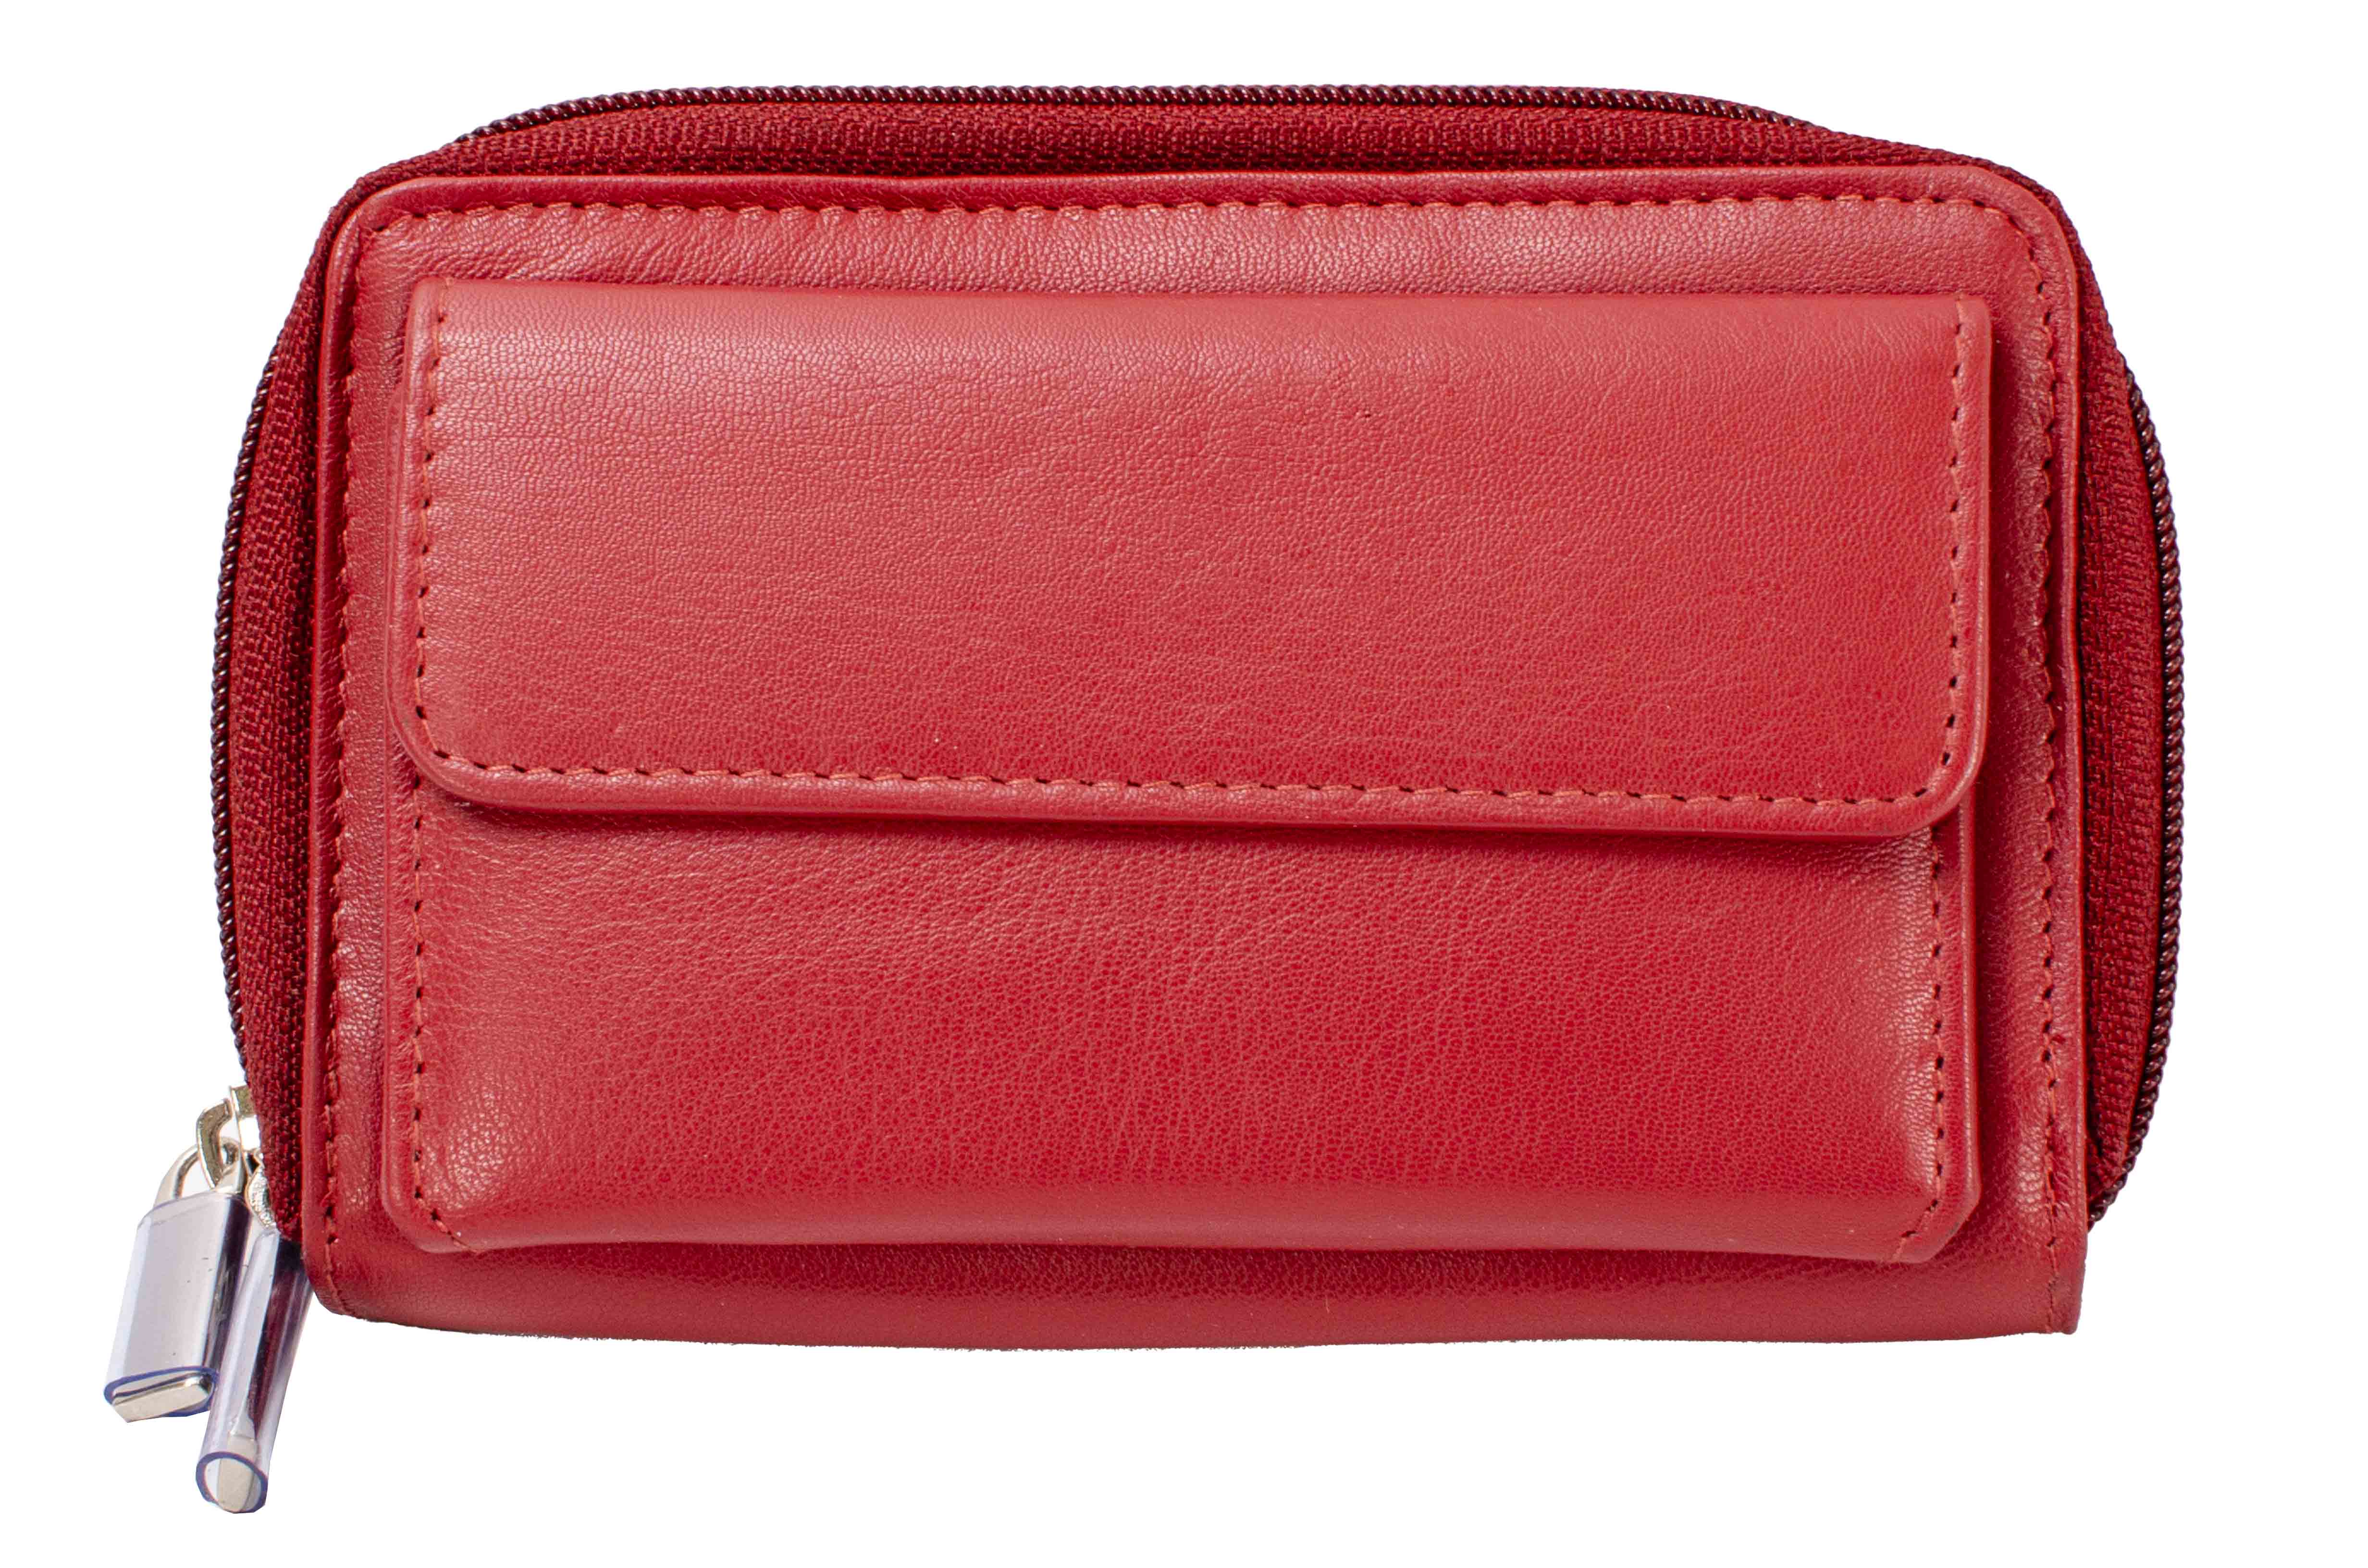 Union Jack leather purse - Red - British Fair